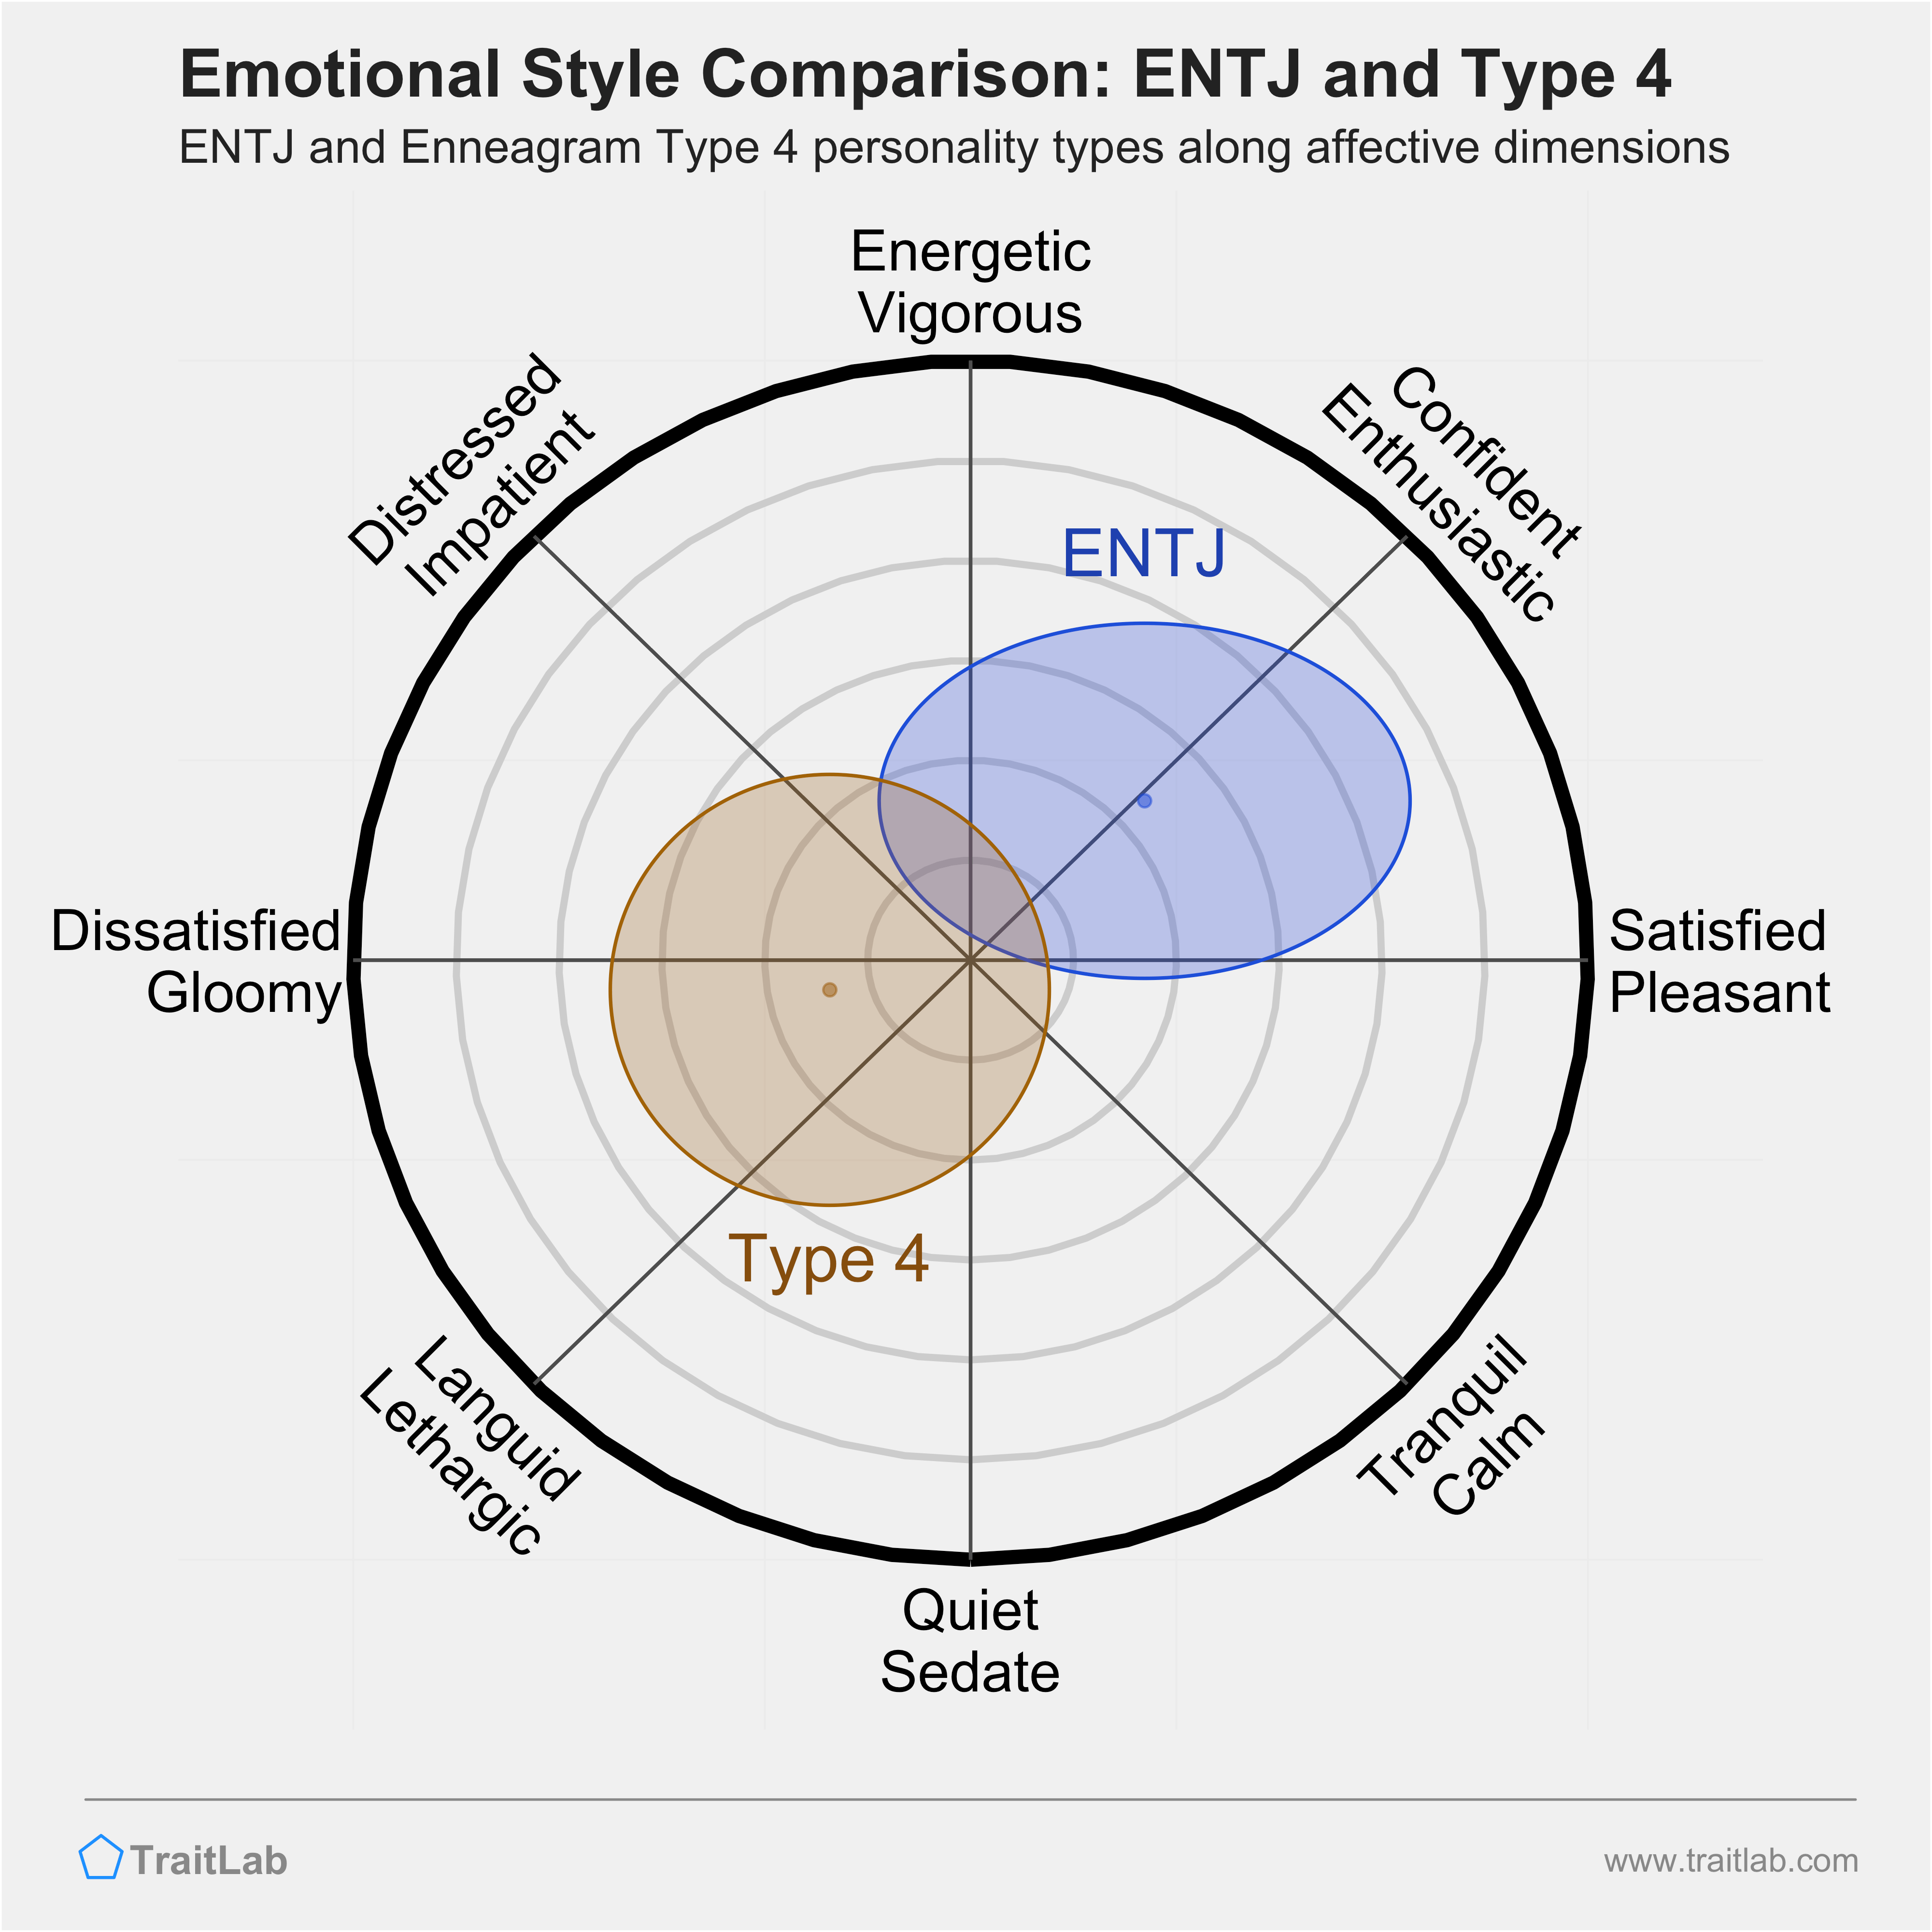 ENTJ and Type 4 comparison across emotional (affective) dimensions